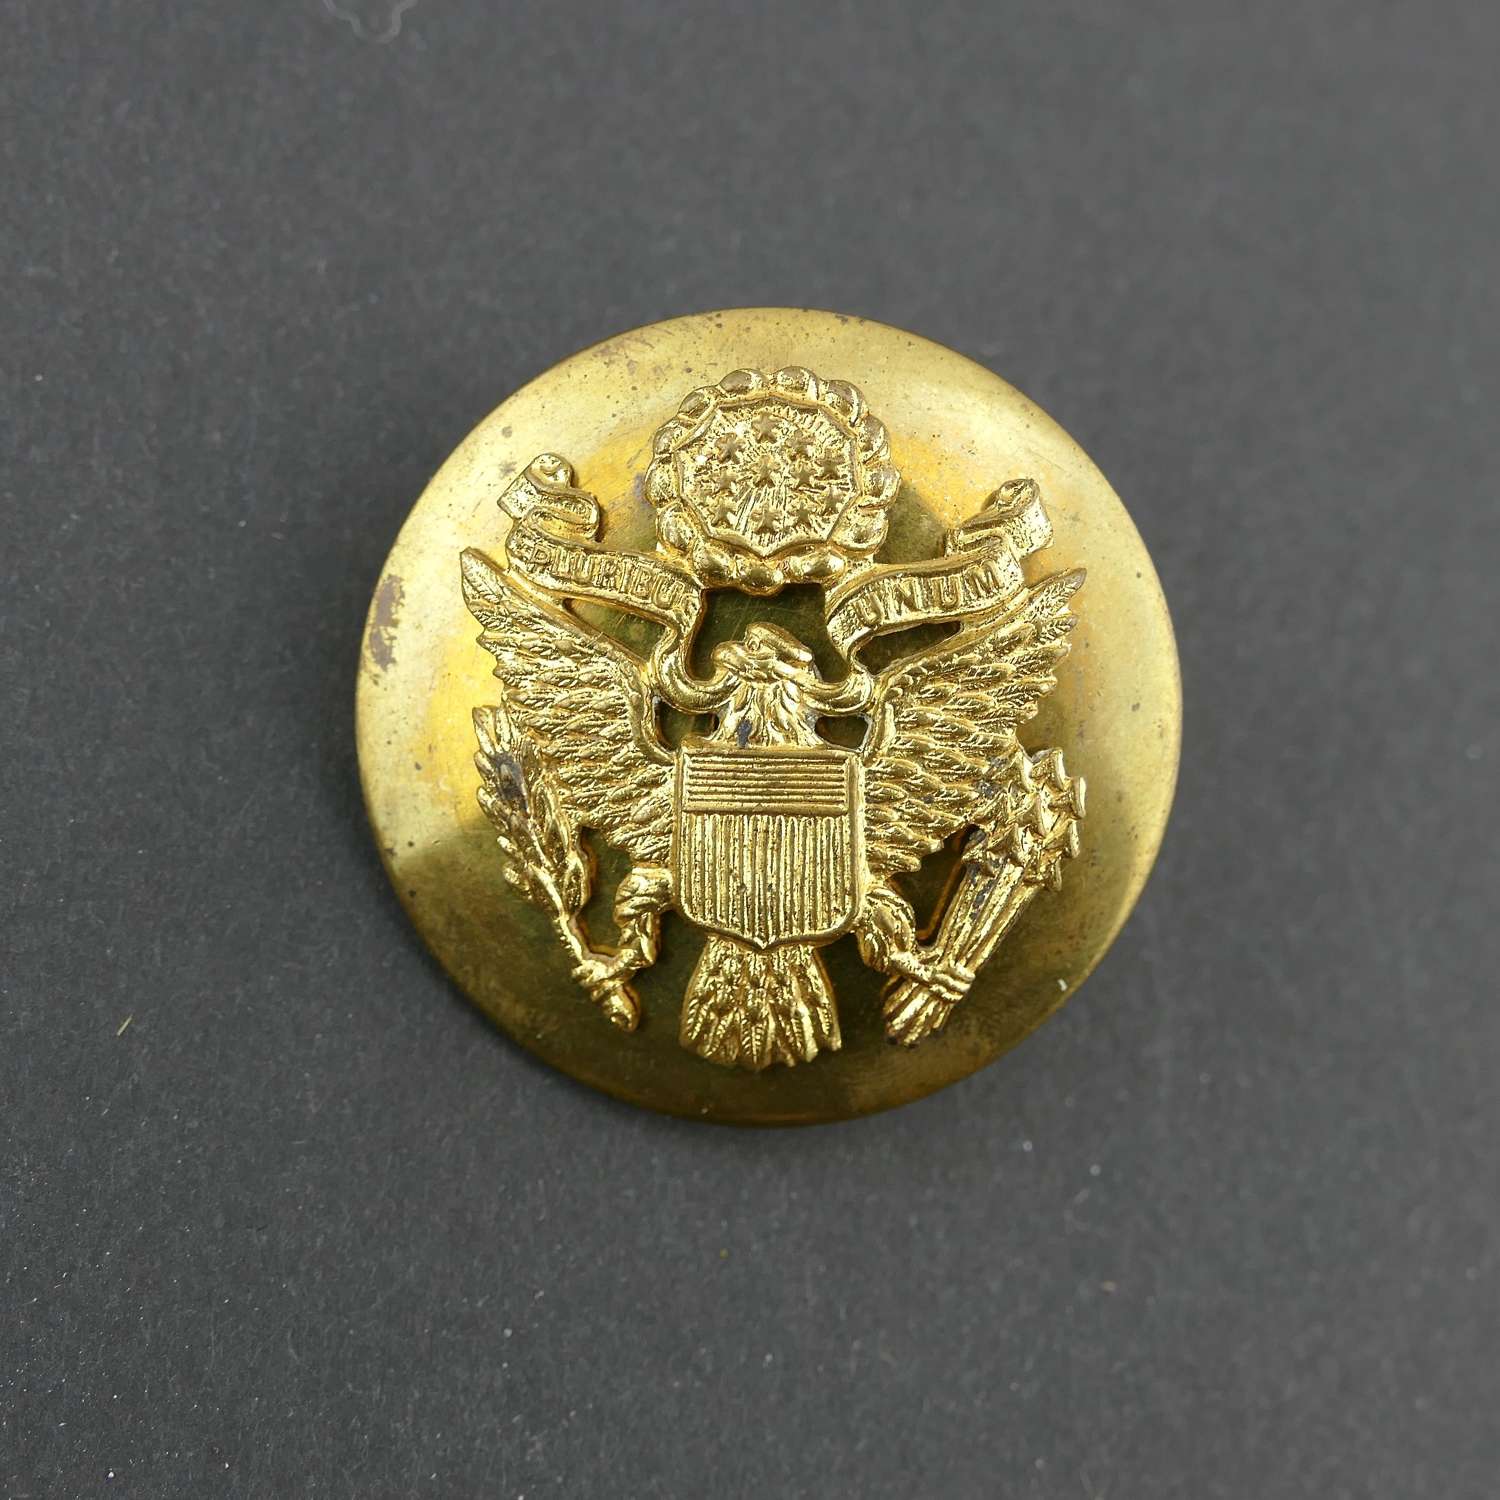 US / USAAF cap badge